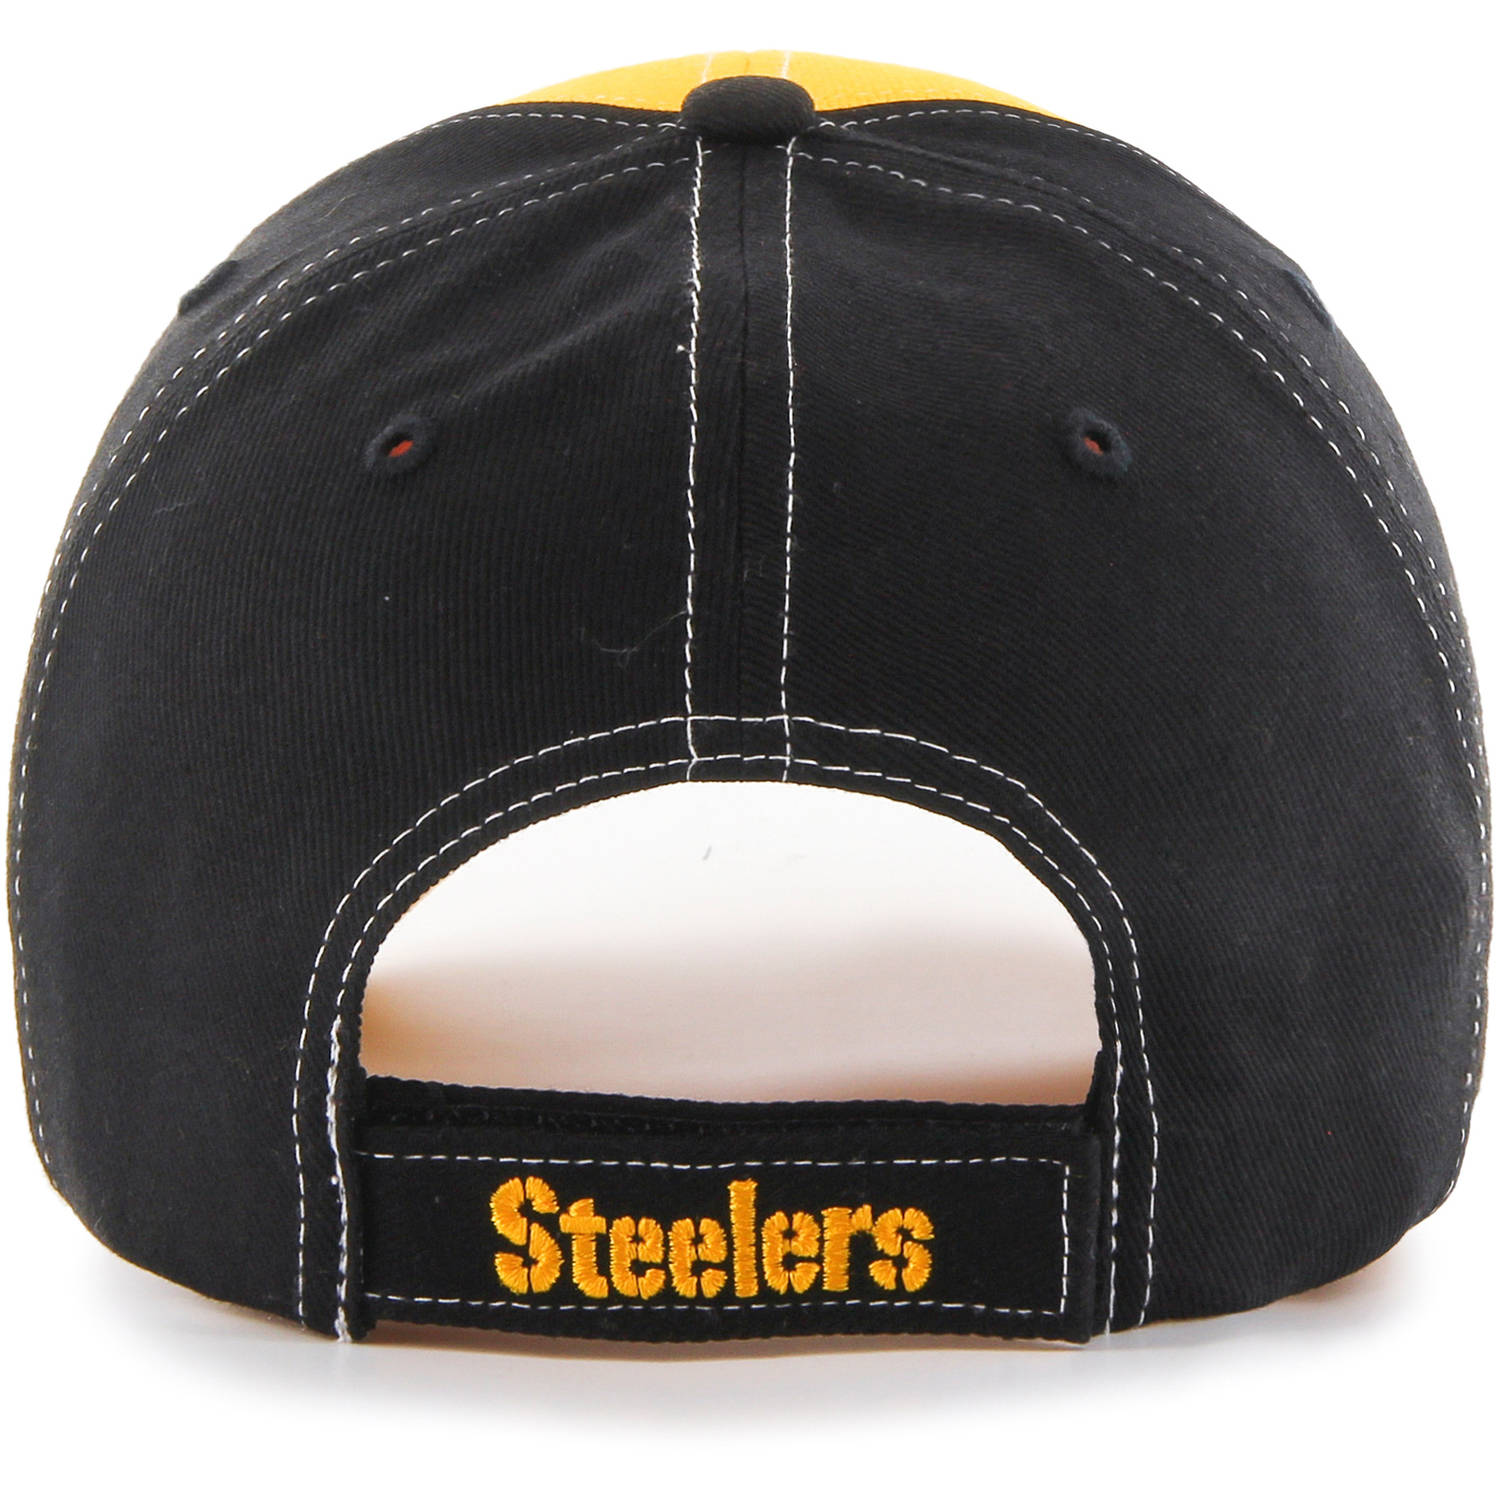 NFL Fan FavoriteRevolver Cap, Pittsburgh Steelers - image 2 of 2